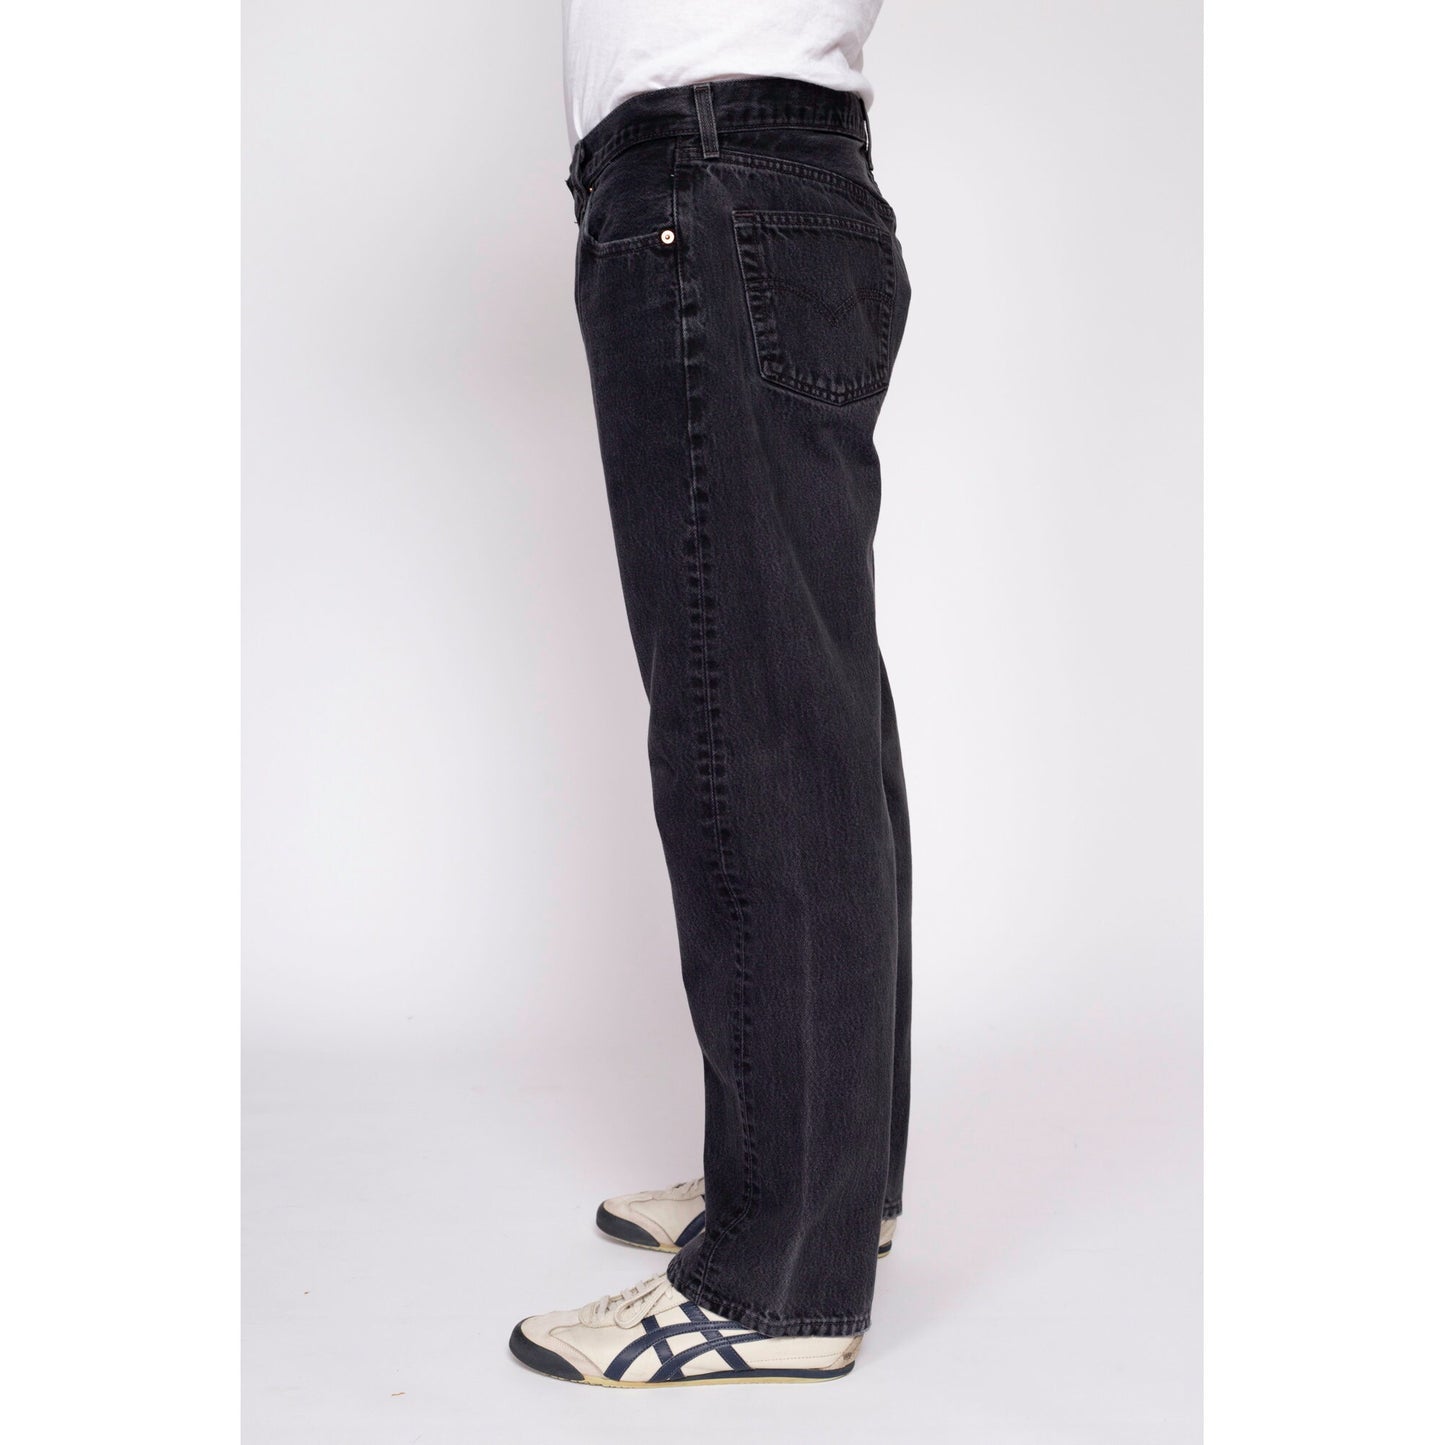 Vintage Levi's 501 Black Jeans - 36x30 | 90s Made In USA Denim Straight Leg Jeans